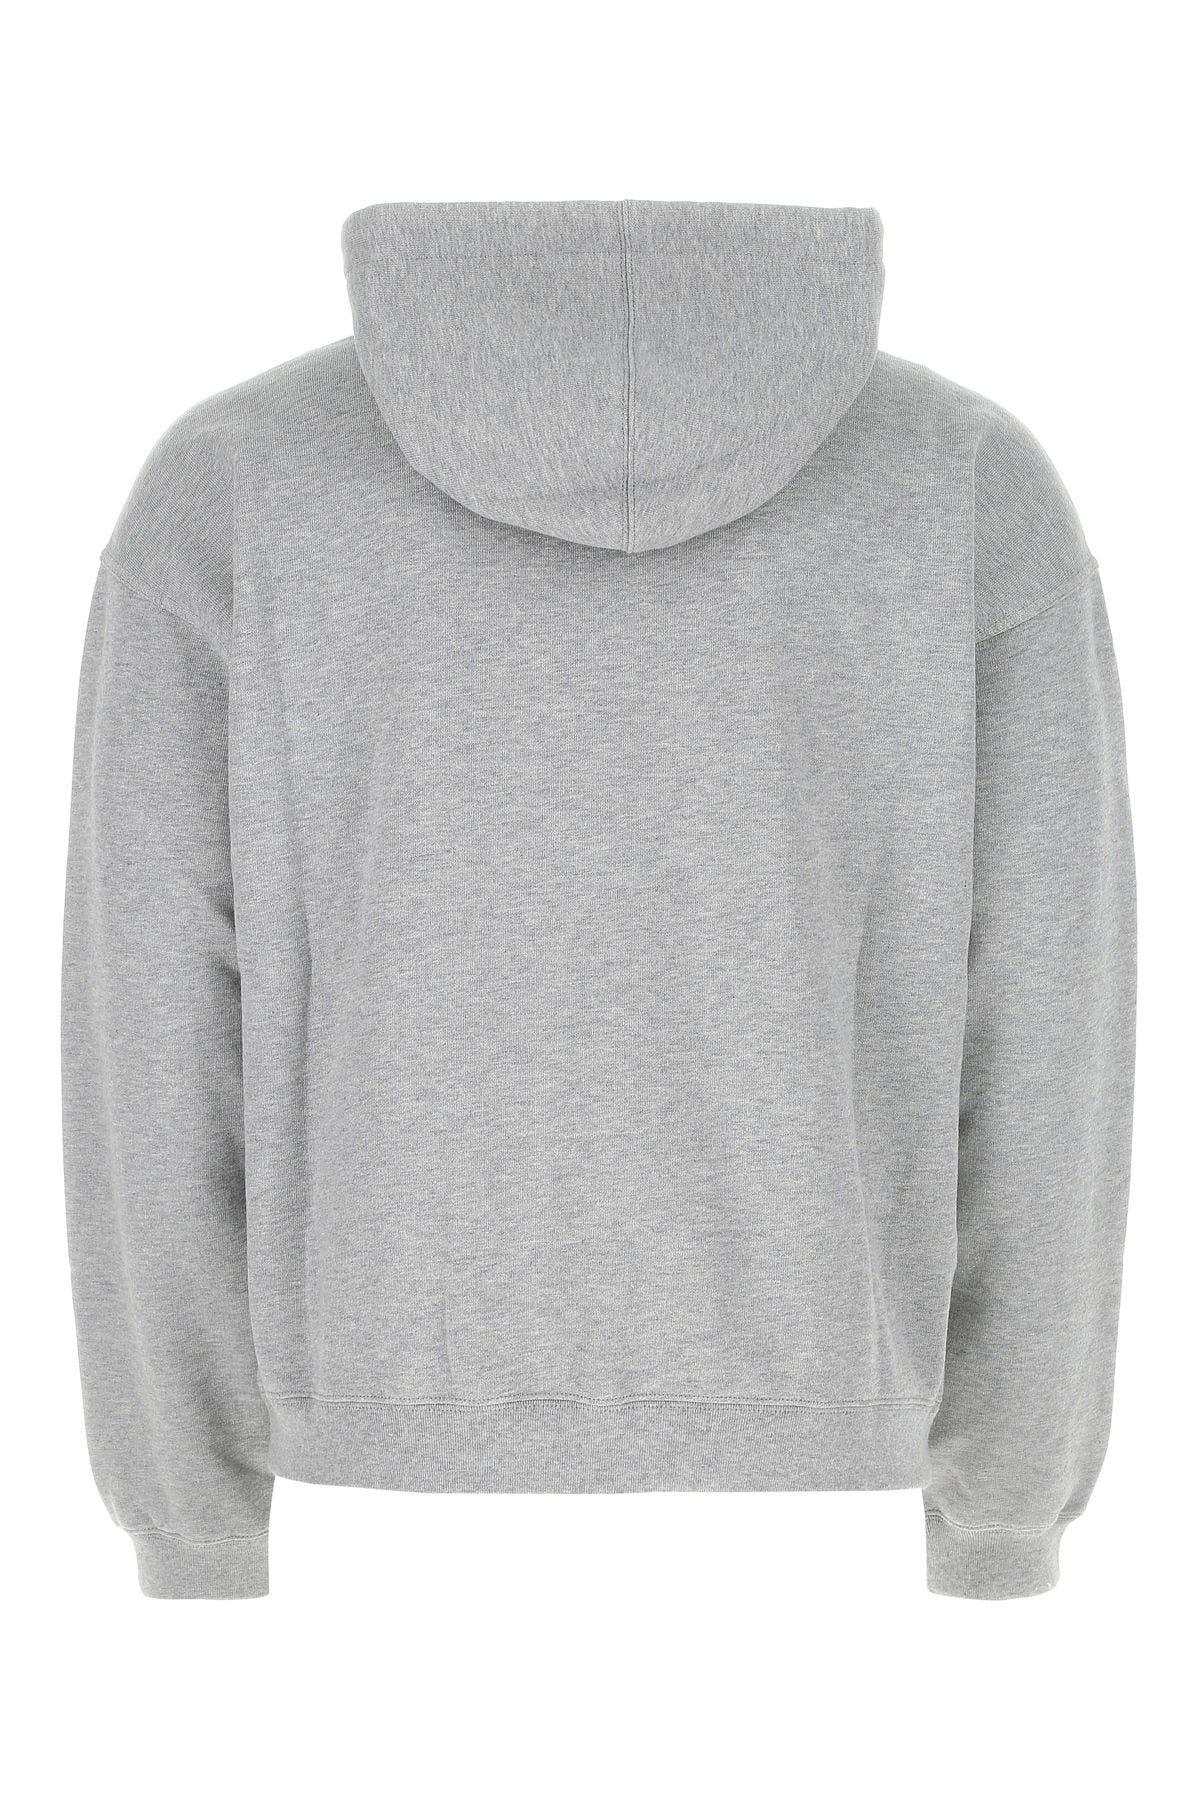 Shop Gucci Melange Grey Cotton Sweatshirt